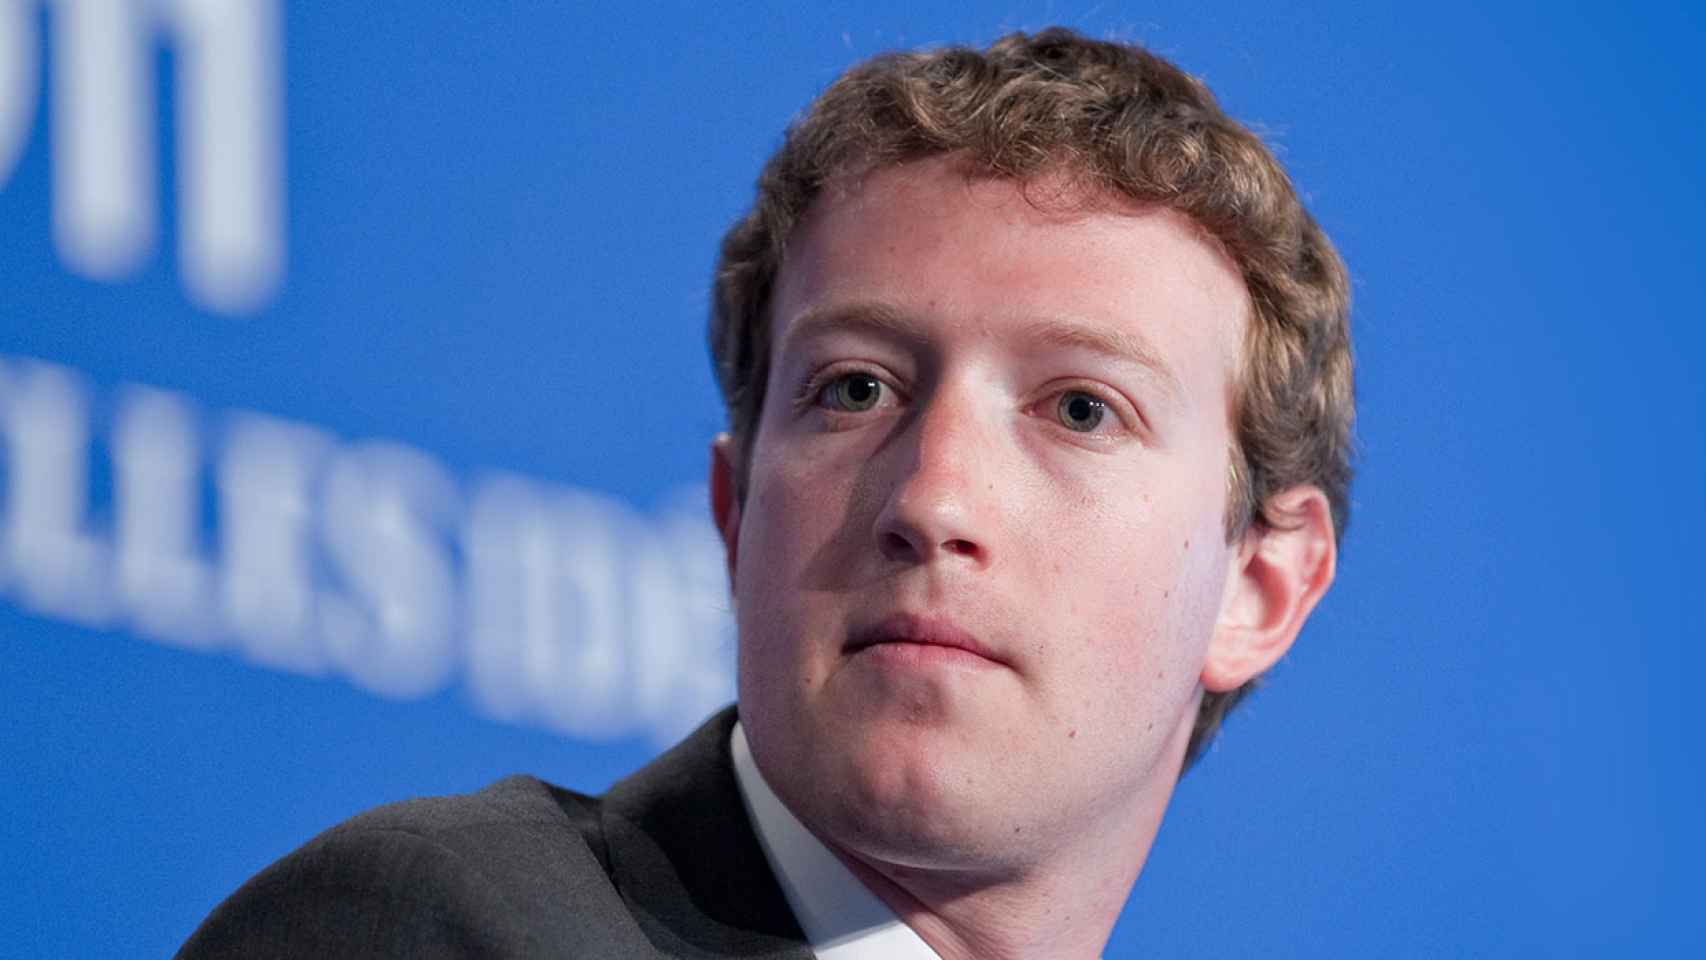 Mark Zuckerberg, fundador de Facebook./ Foto: Innovadores.